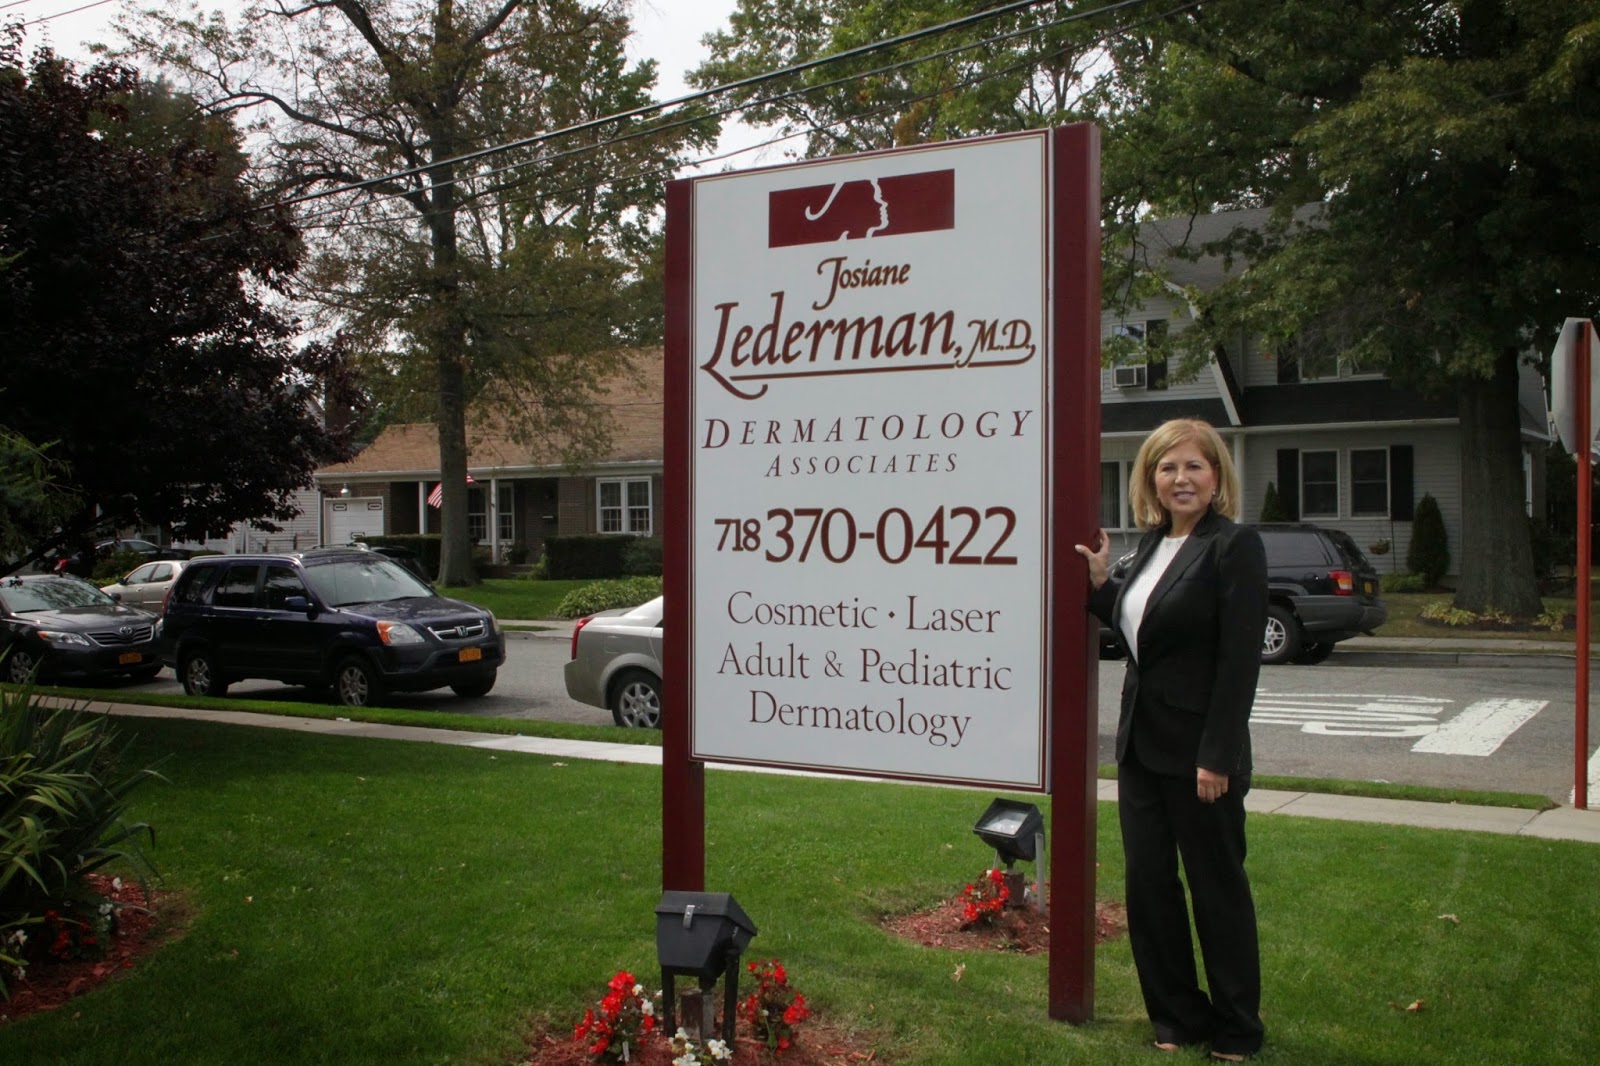 Photo of Josiane Lederman MD: Dermatology Associates in Staten Island City, New York, United States - 1 Picture of Point of interest, Establishment, Health, Doctor, Spa